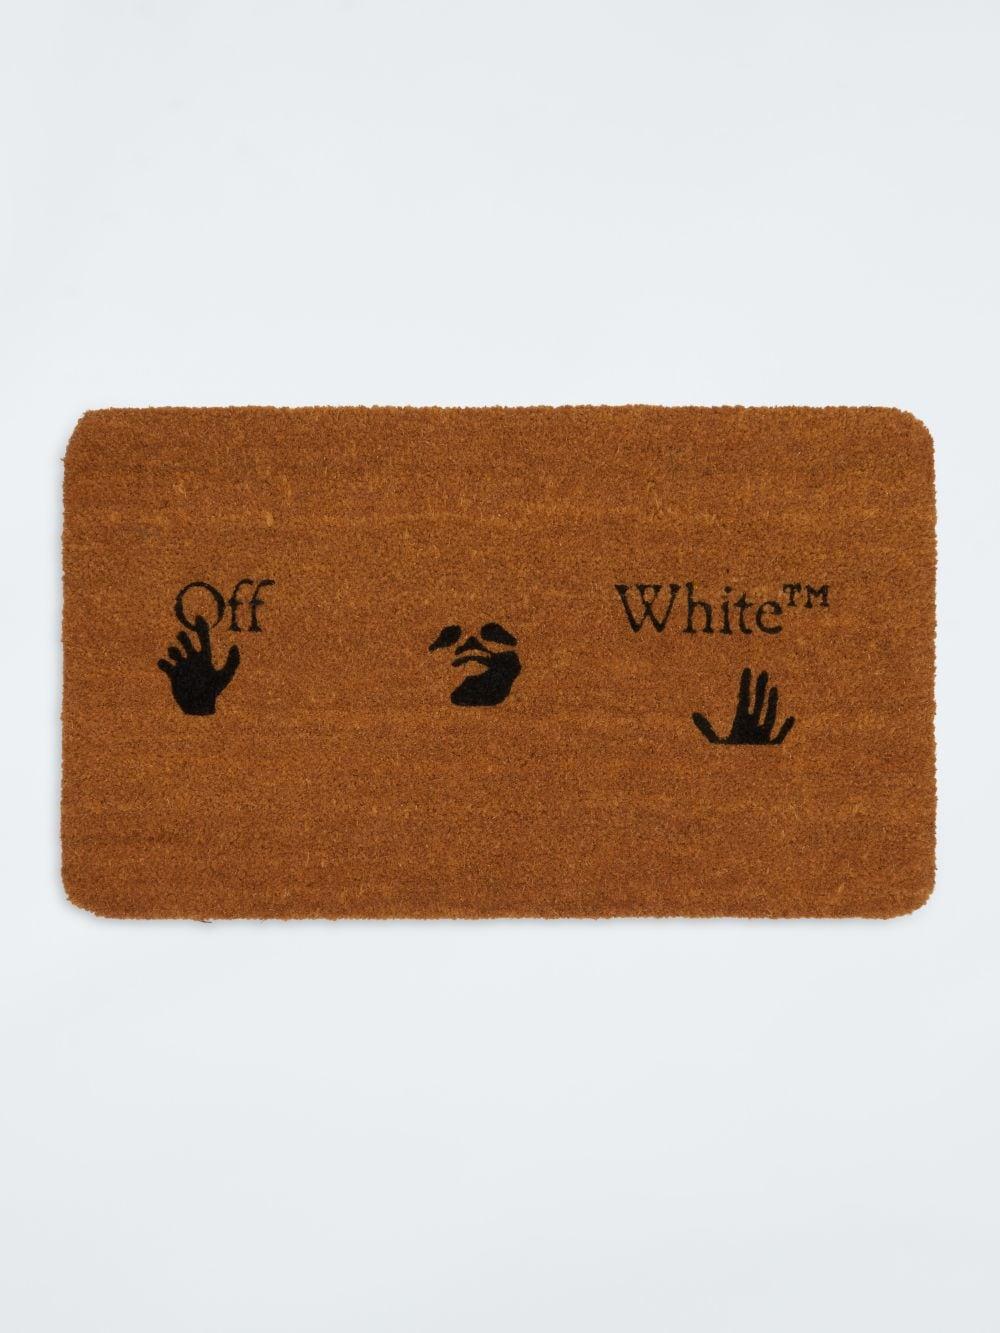 Off-White Logo Doormat - Art by Off White / Virgil Abloh